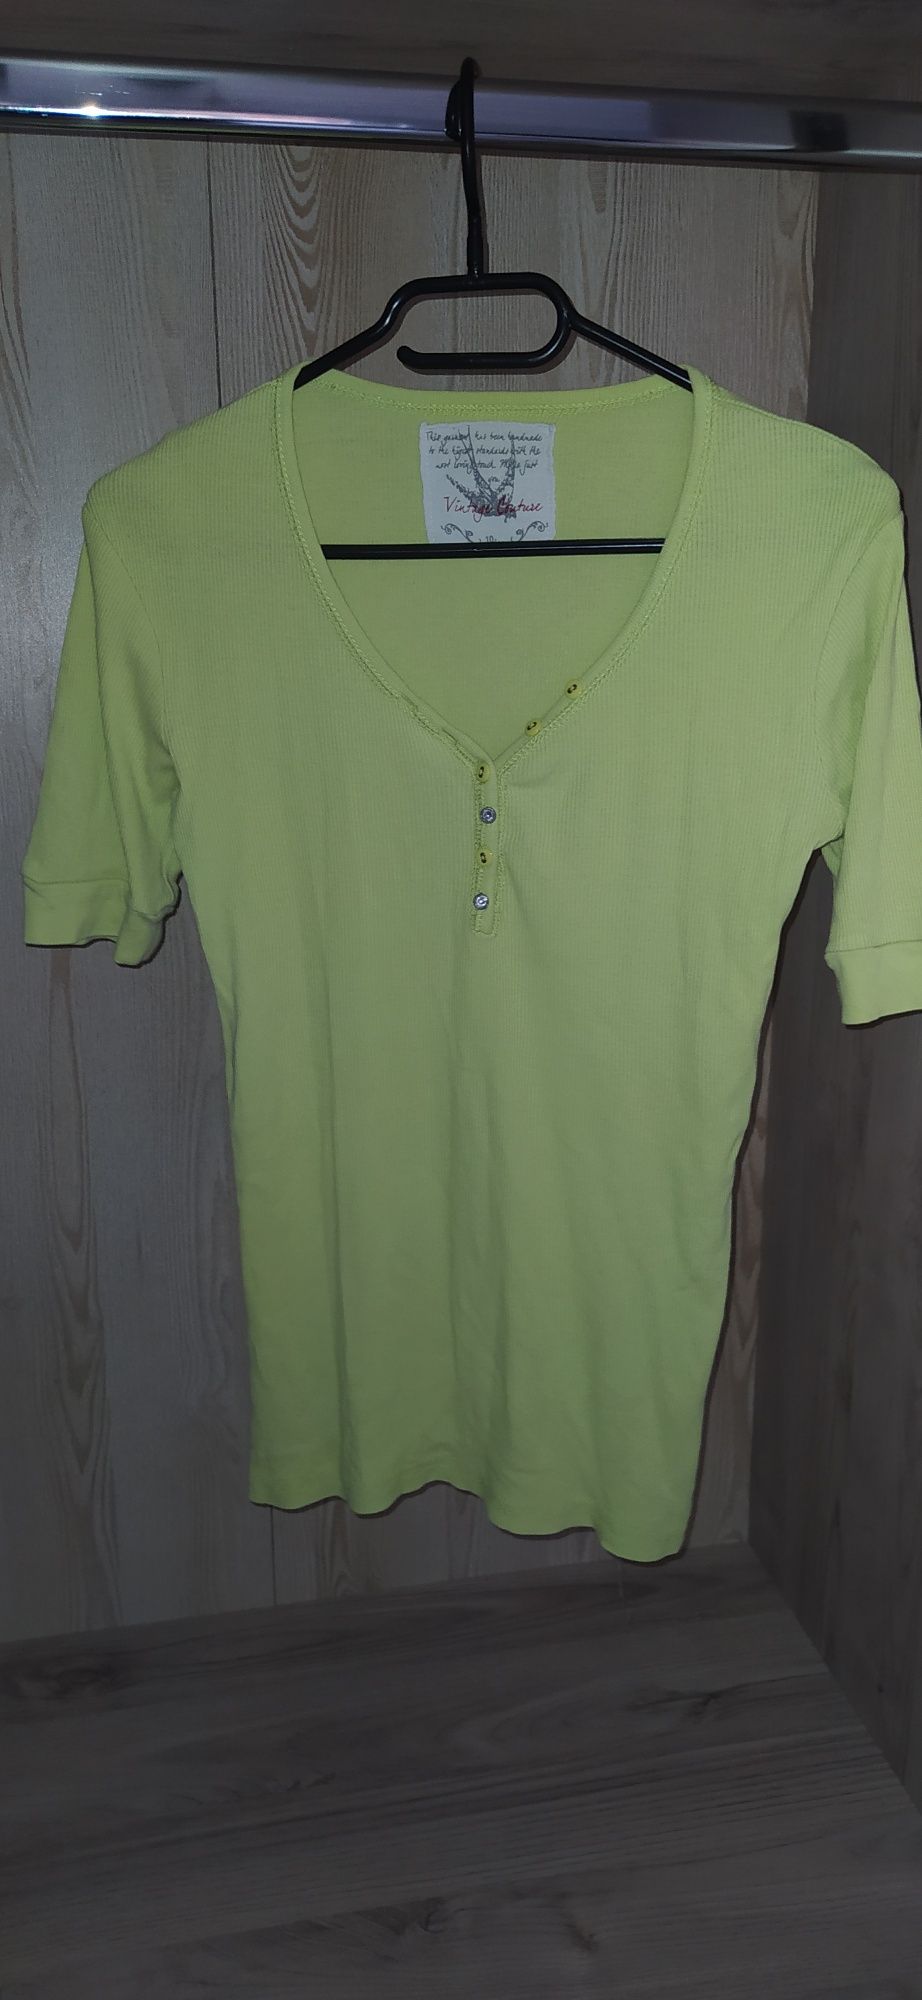 jaskrawa zielona bluzka